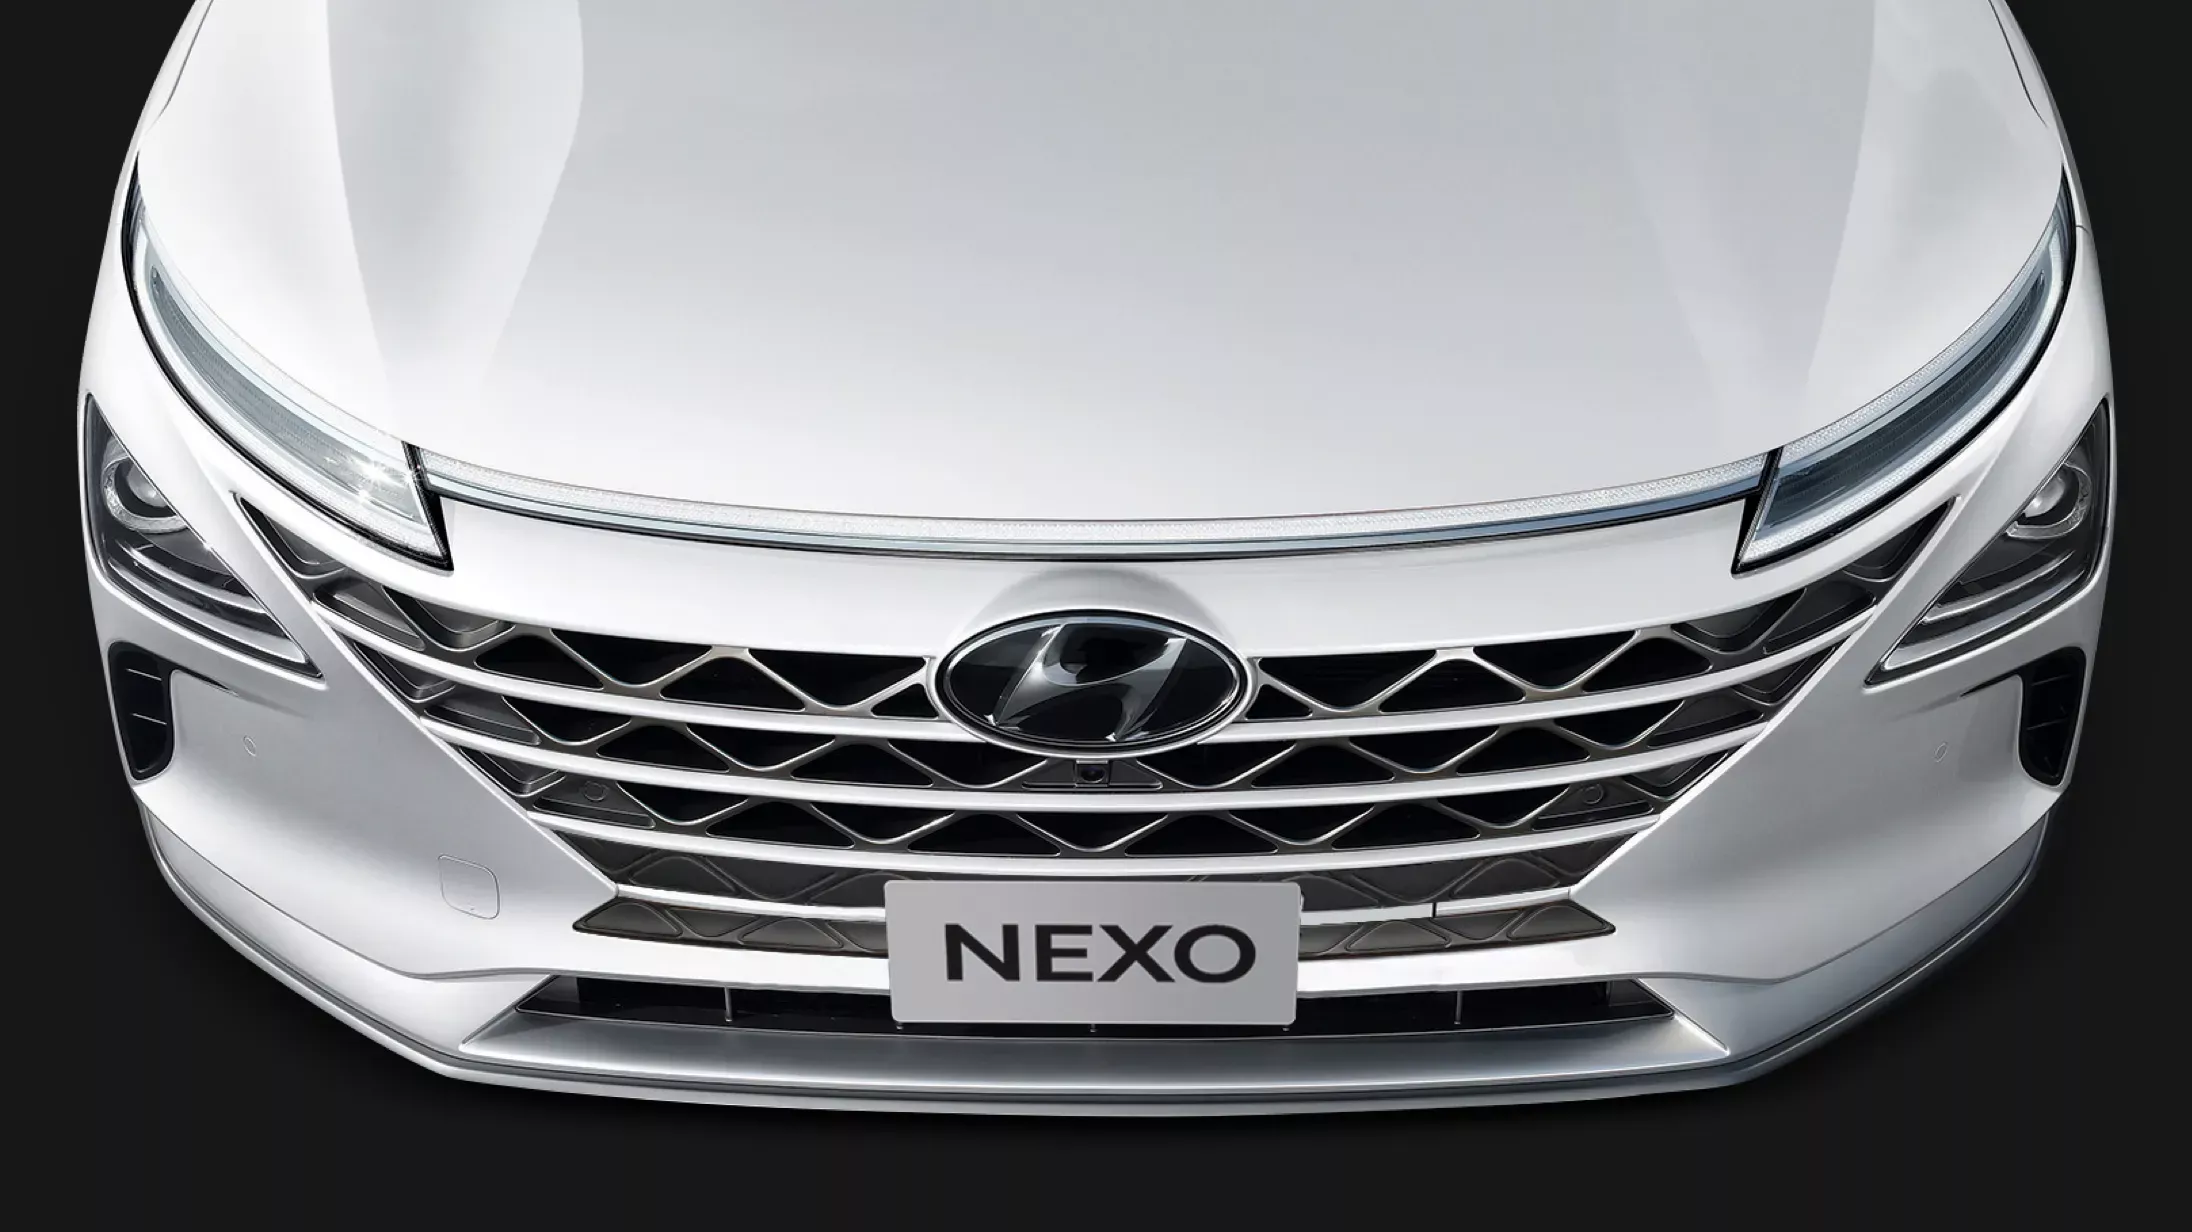 NEXO (ネッソ) 燃料電池車 FCEV カスケーディンググリル - Hyundai Mobility Japan (ヒョンデモビリティジャパン)